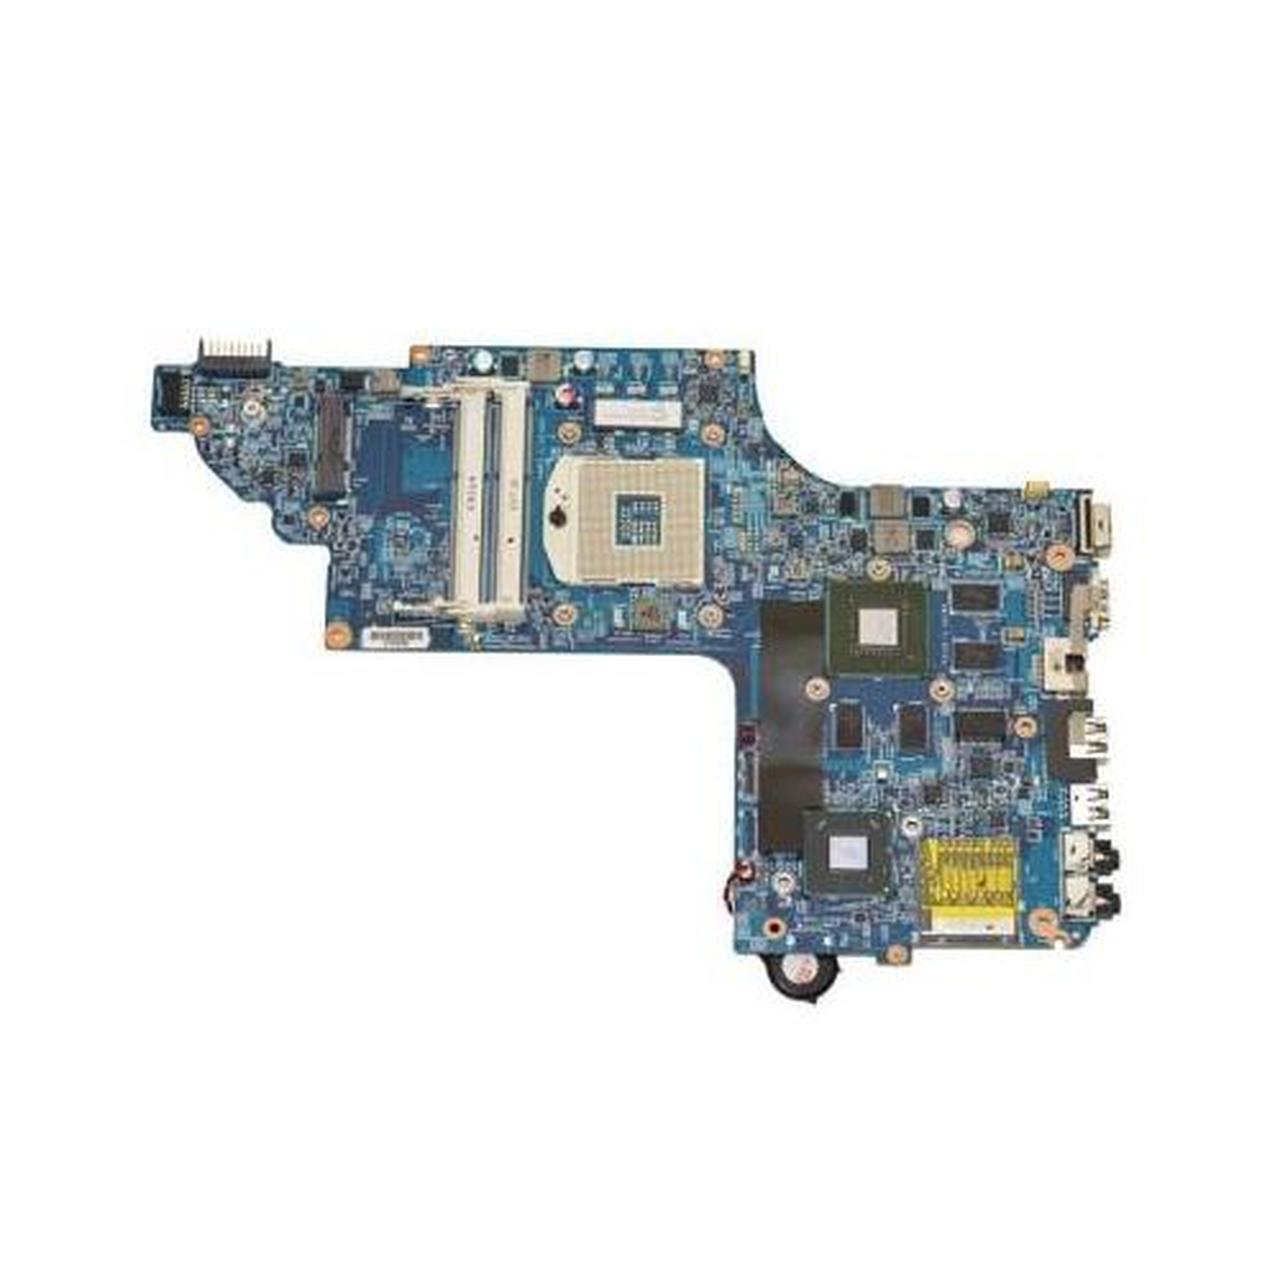 682040-001 HP System Board (MotherBoard) Intel HM77 650M/2G for Pavilion DV7-7000 Notebook PC (Refurbished)